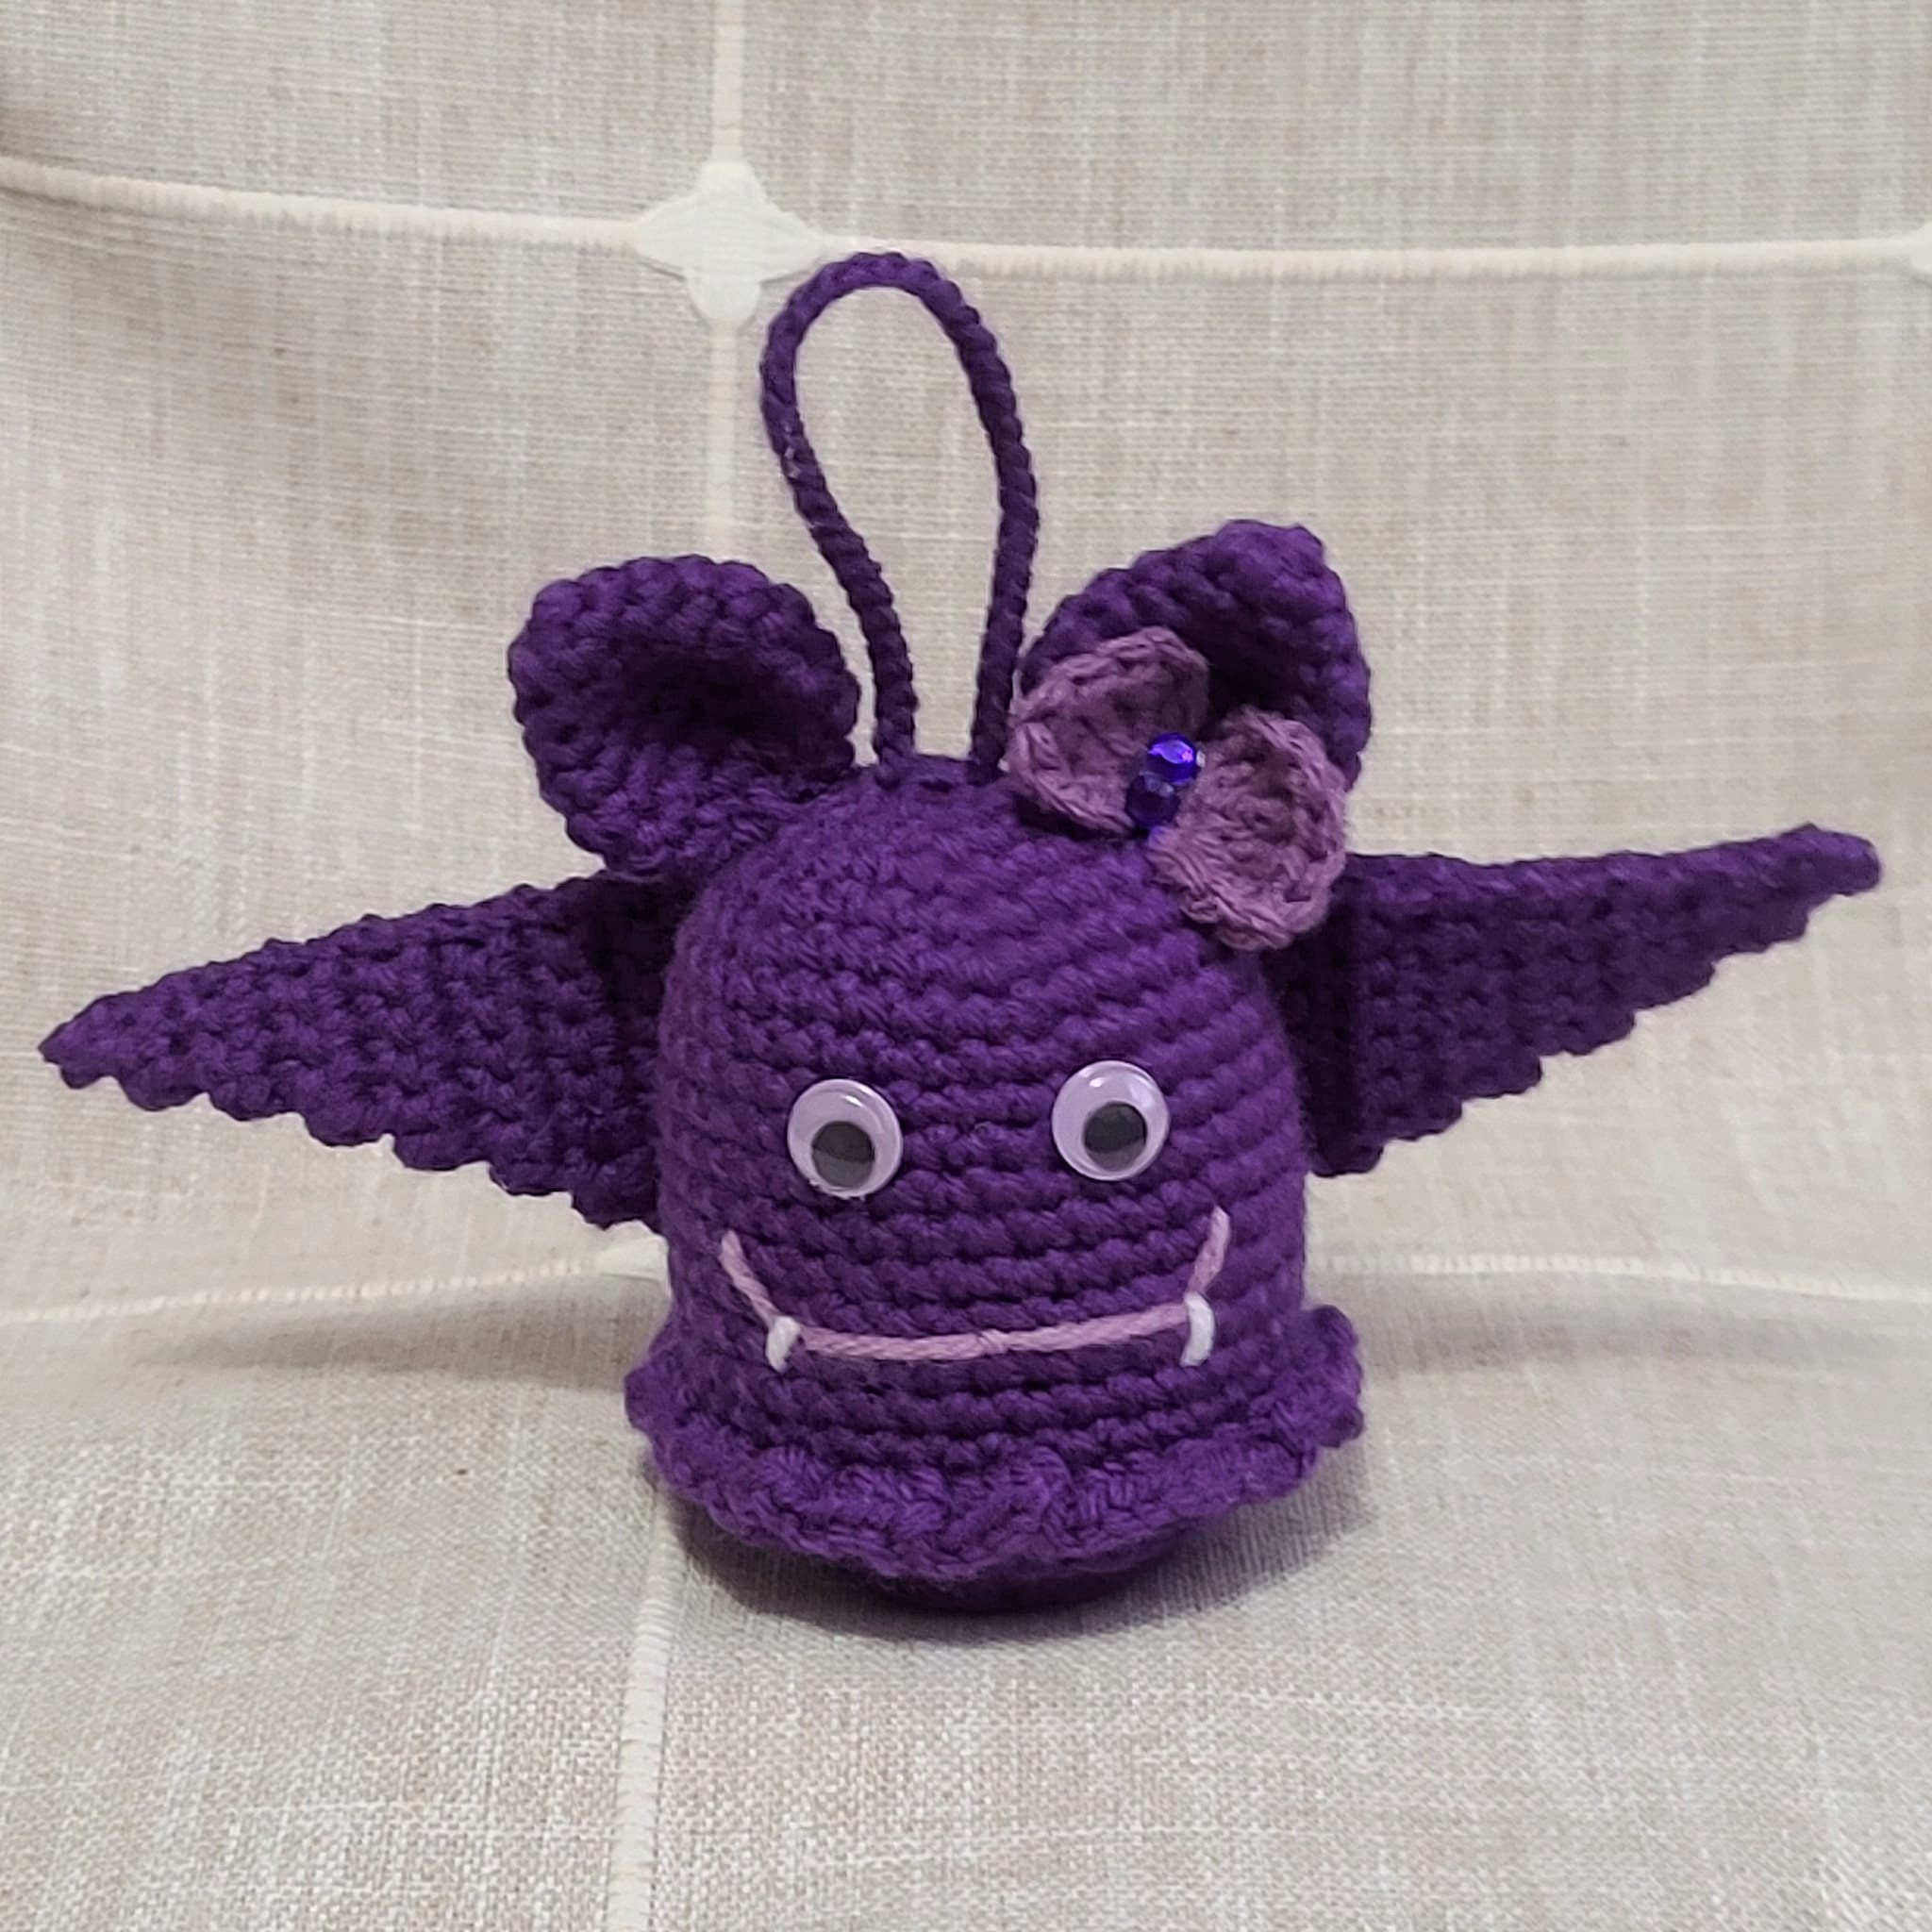 Crochet amigurumi handmade halloween bat - purple